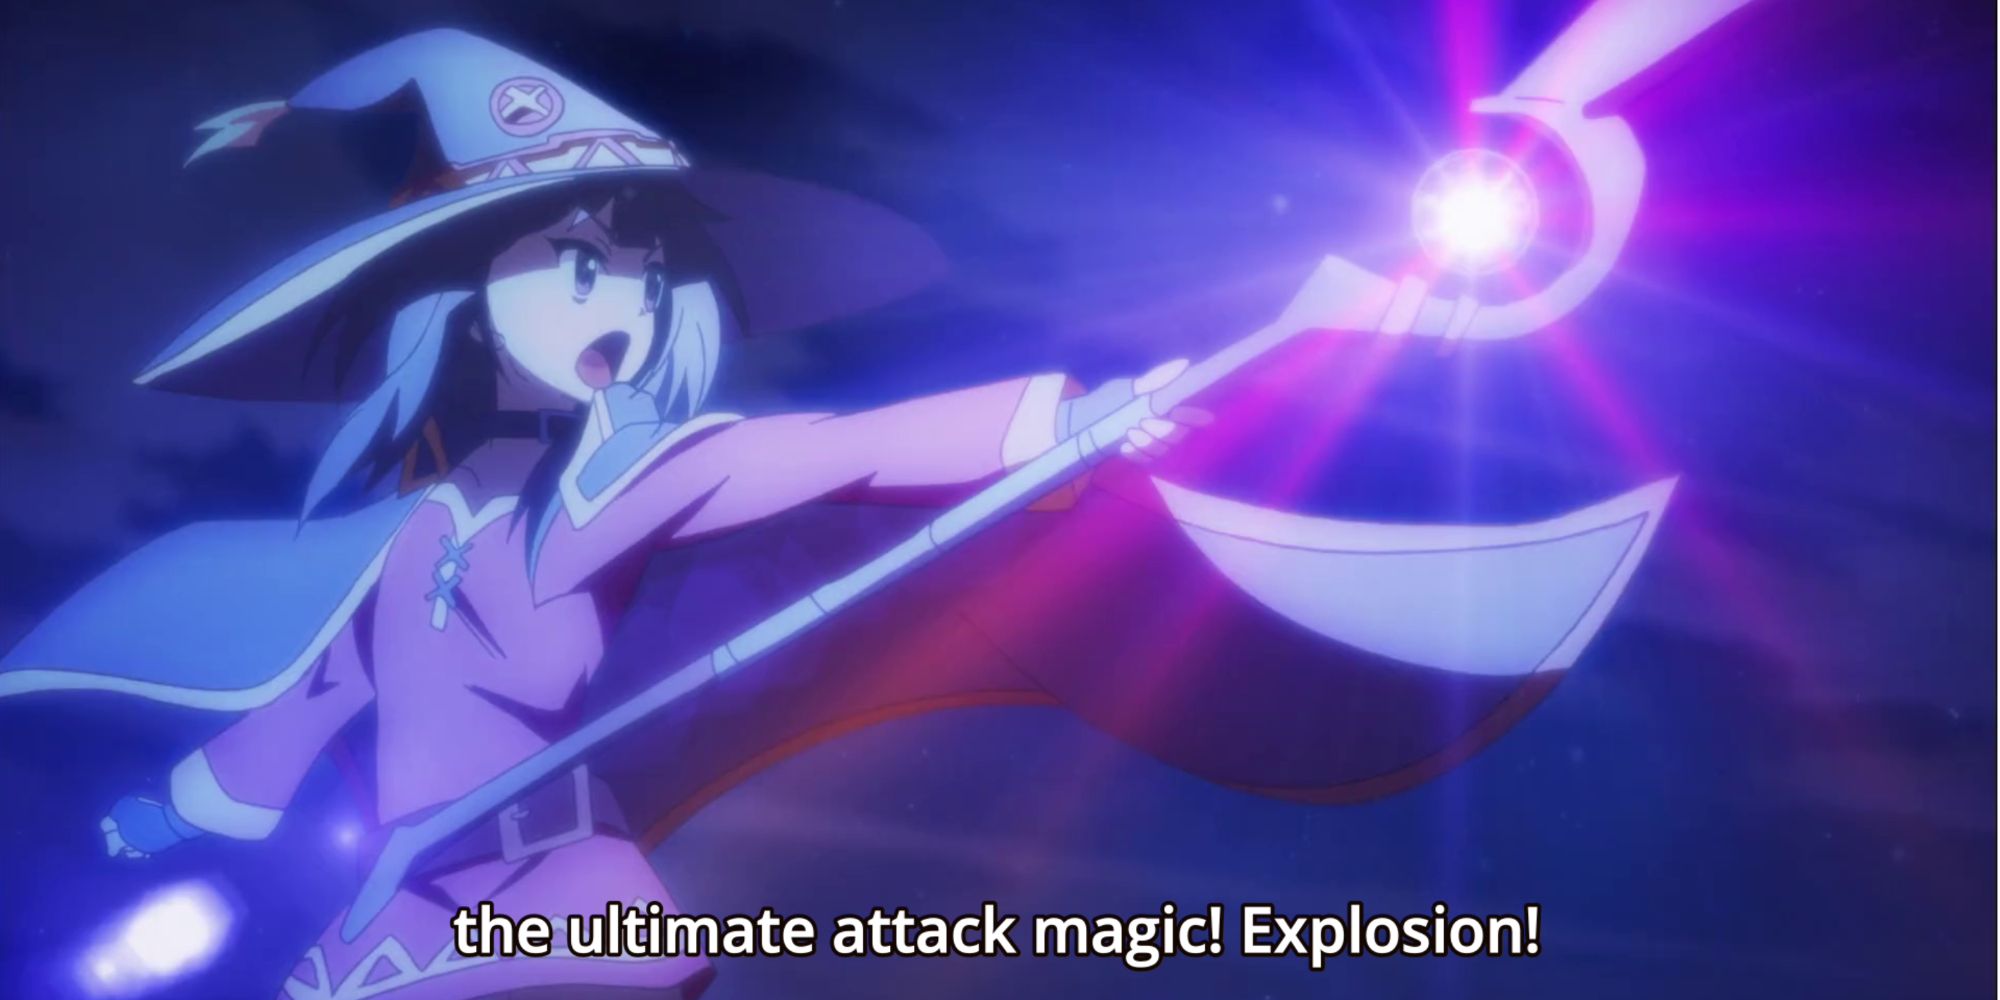 megumin using explosion magic